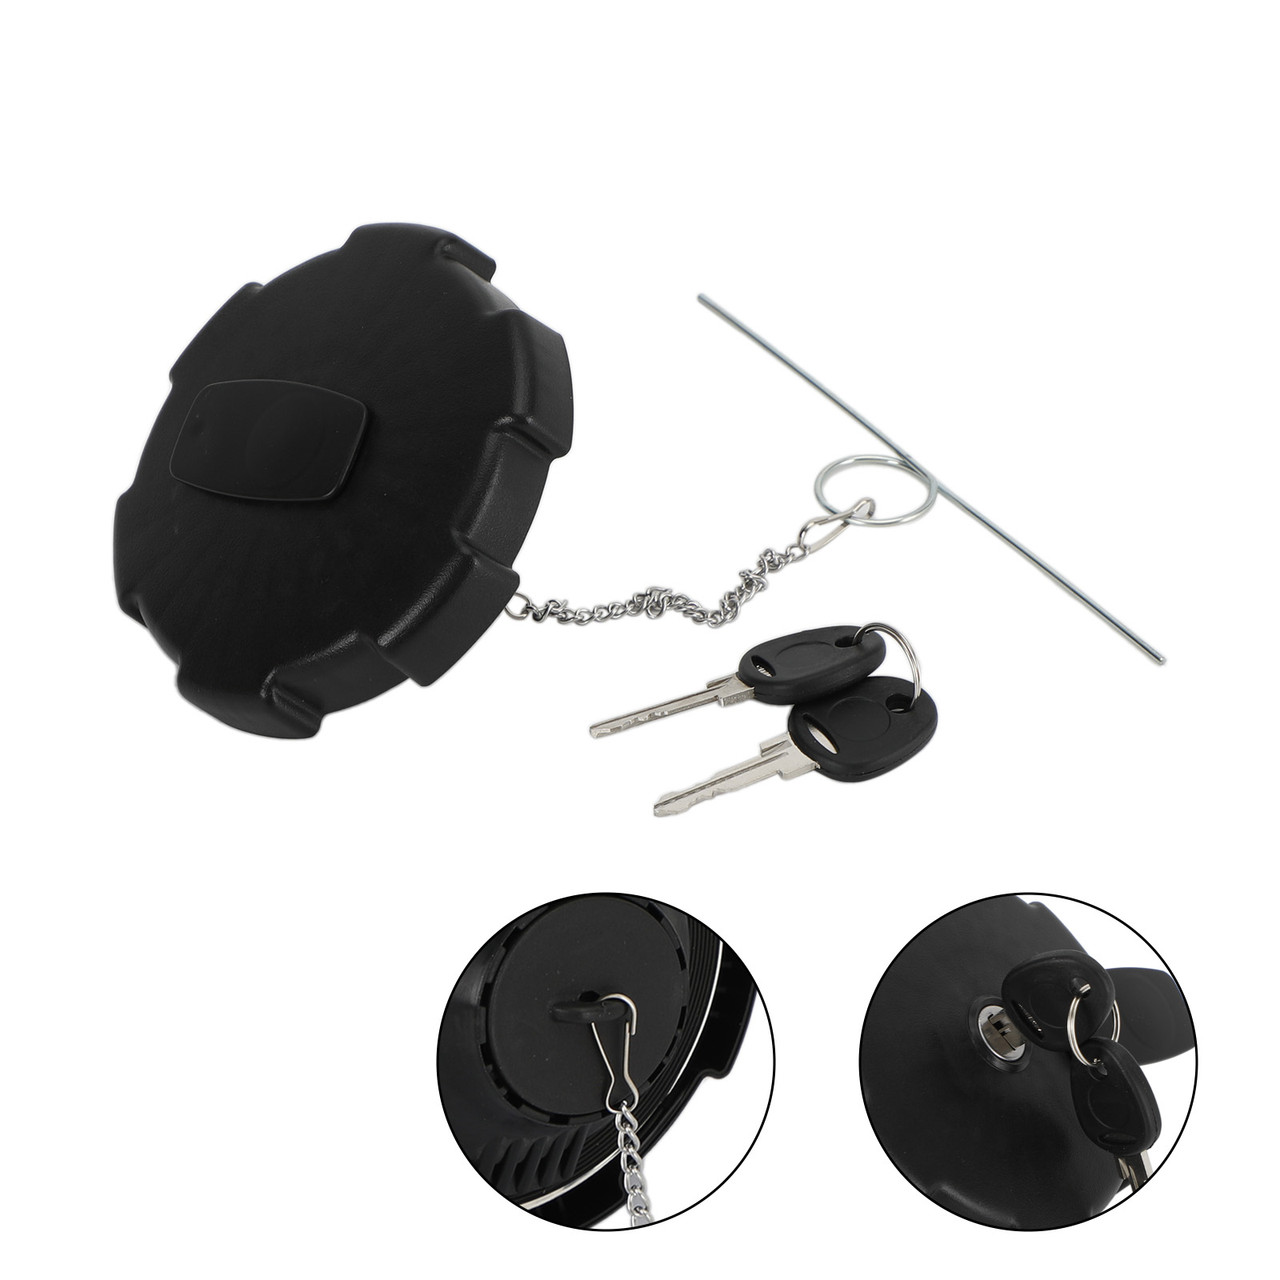 20392751 Locking Fuel Cap For Volvo Wheel Loader L60 L90 L110 L120 With Keys